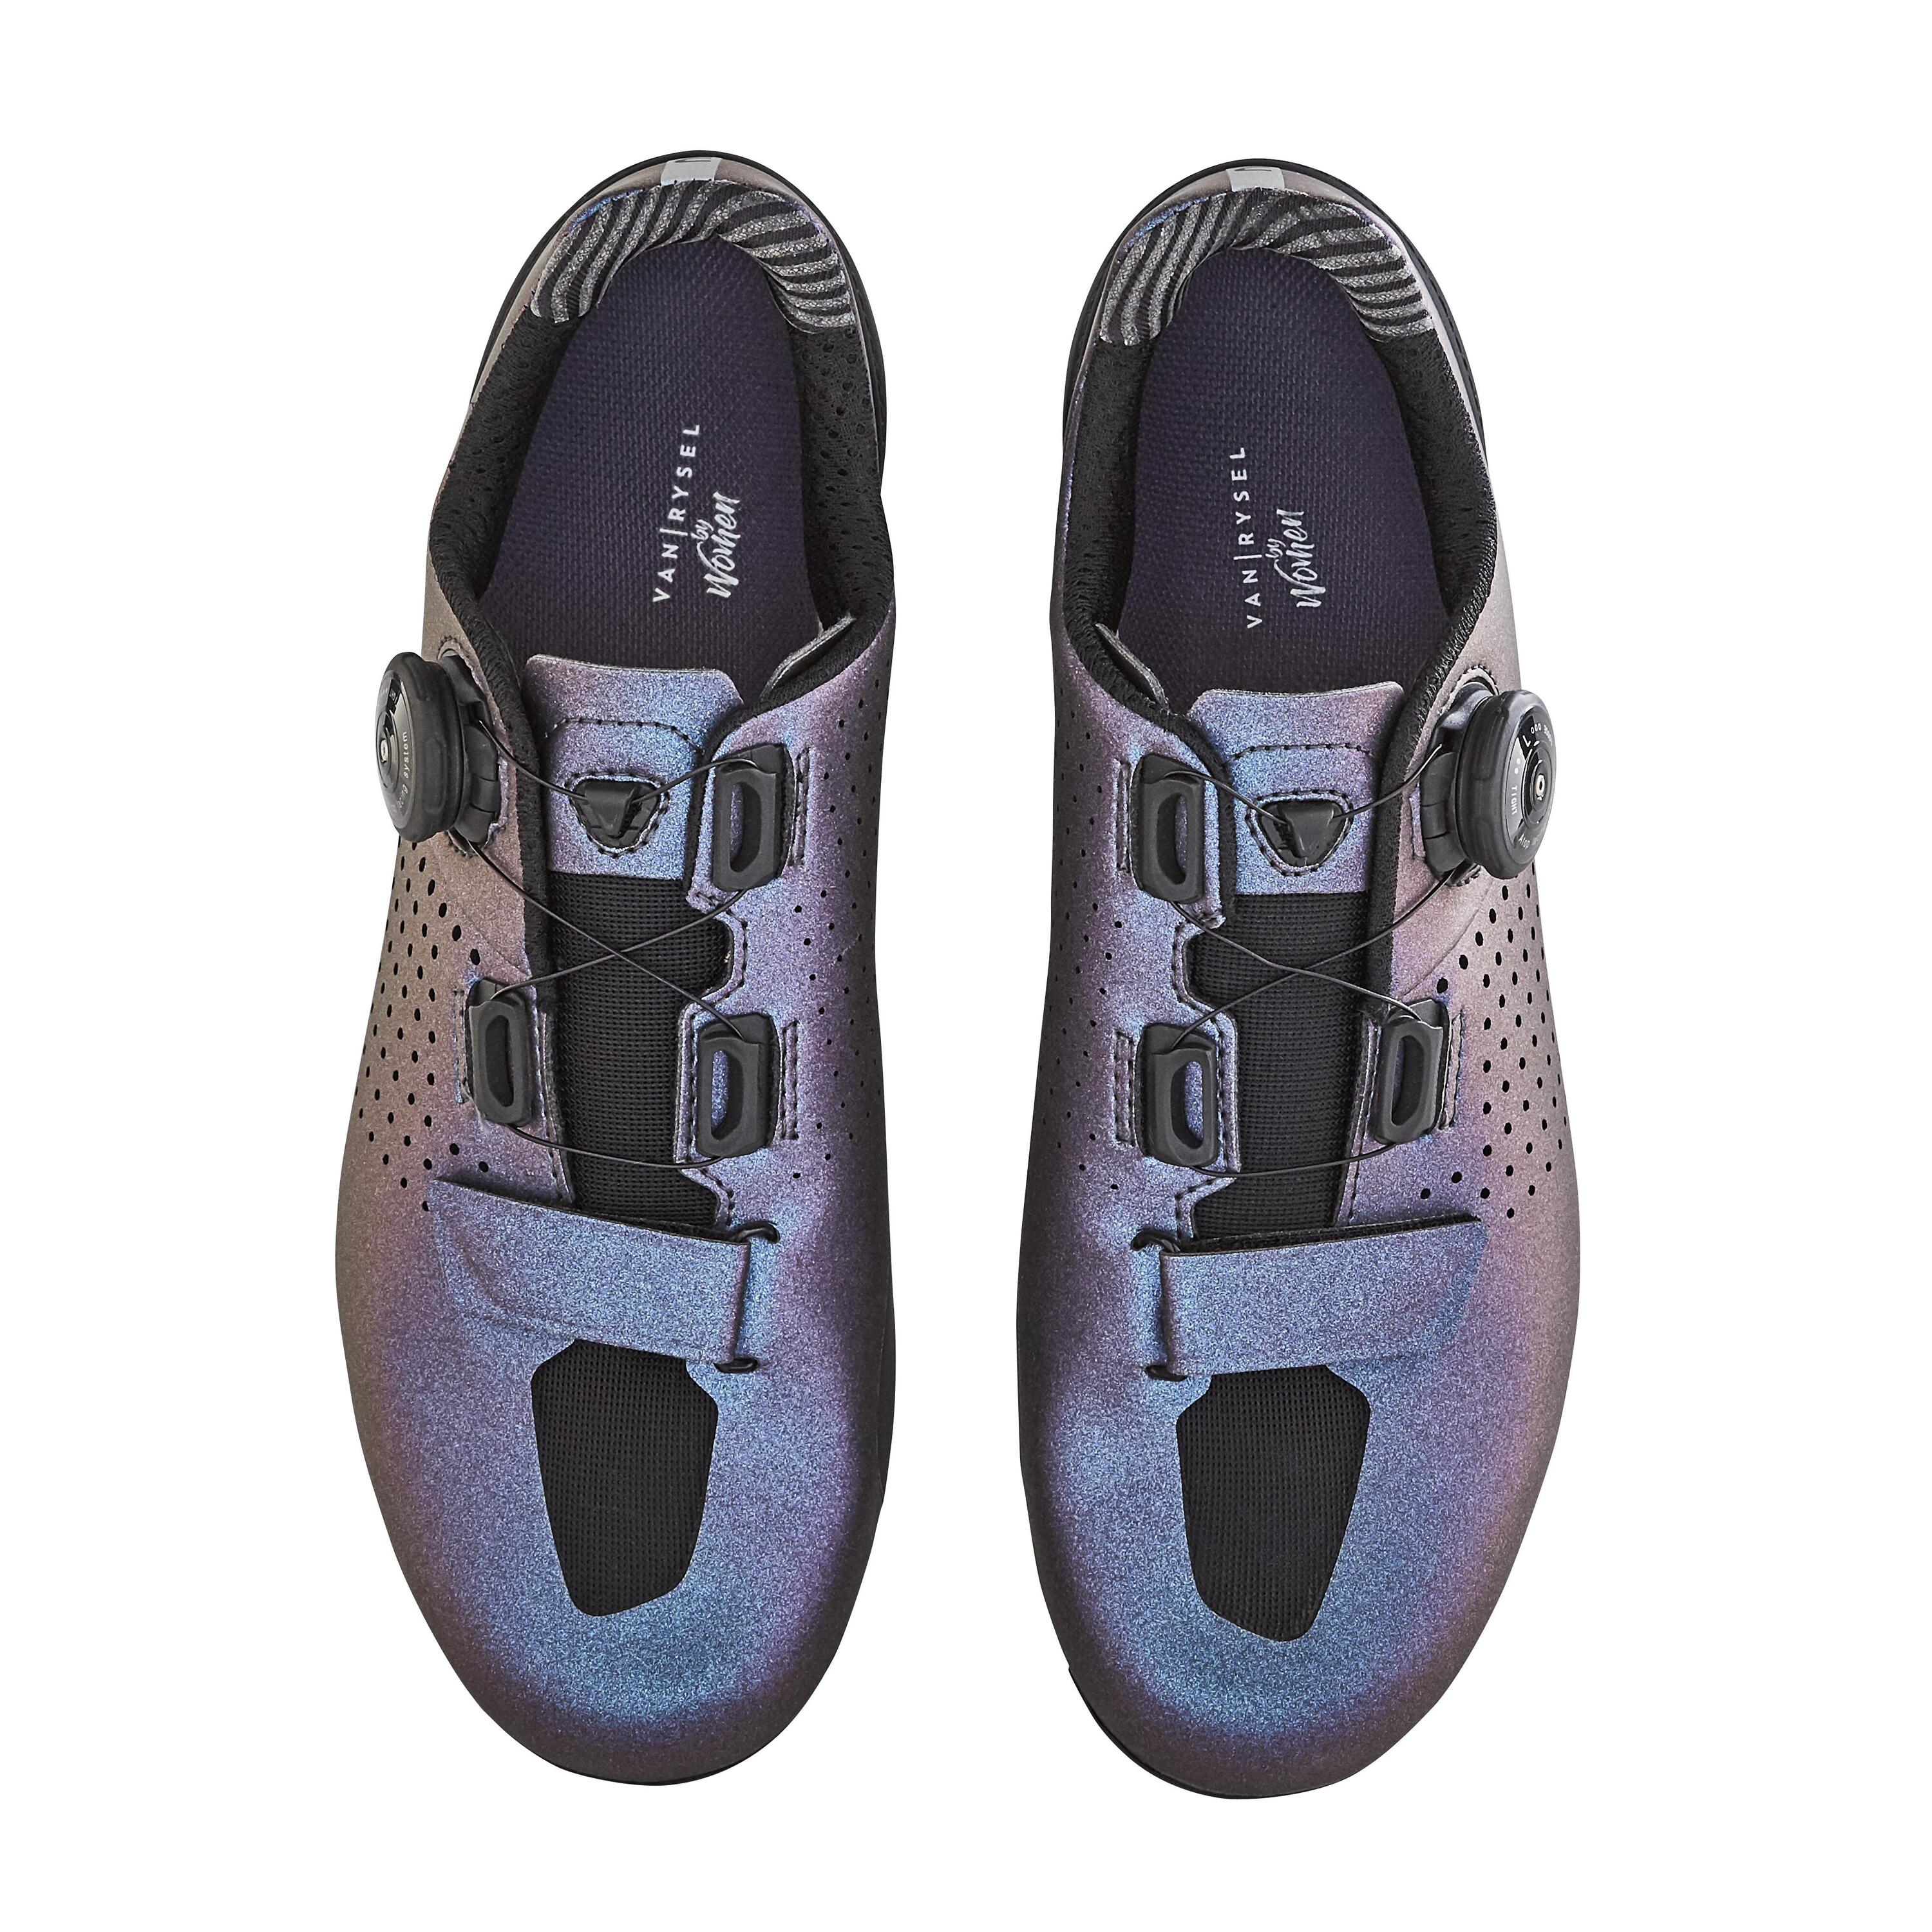 RoadR 520 Women's Carbon Road Cycling Shoes - Iridescent Purple 4/6